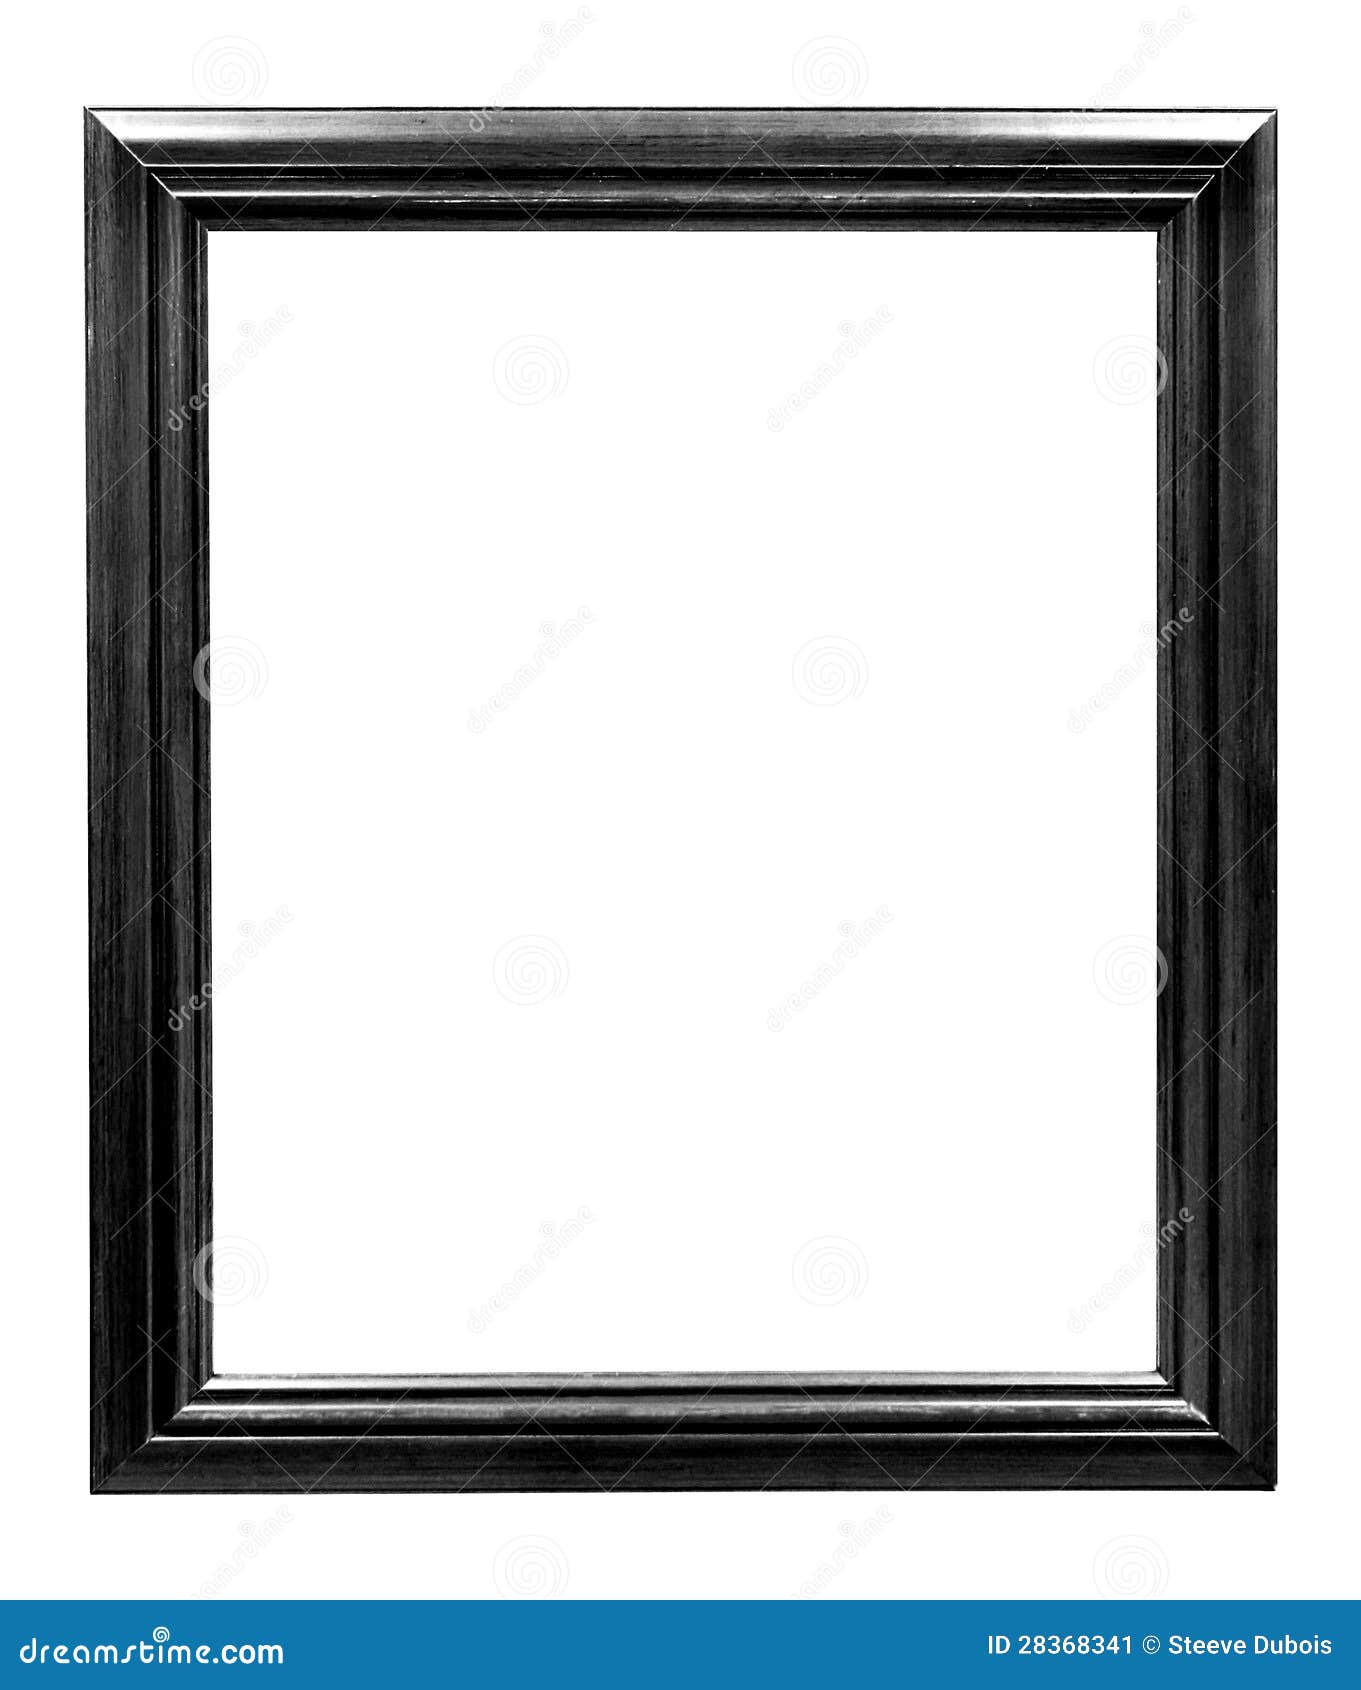 black lacquered wooden frame  on white